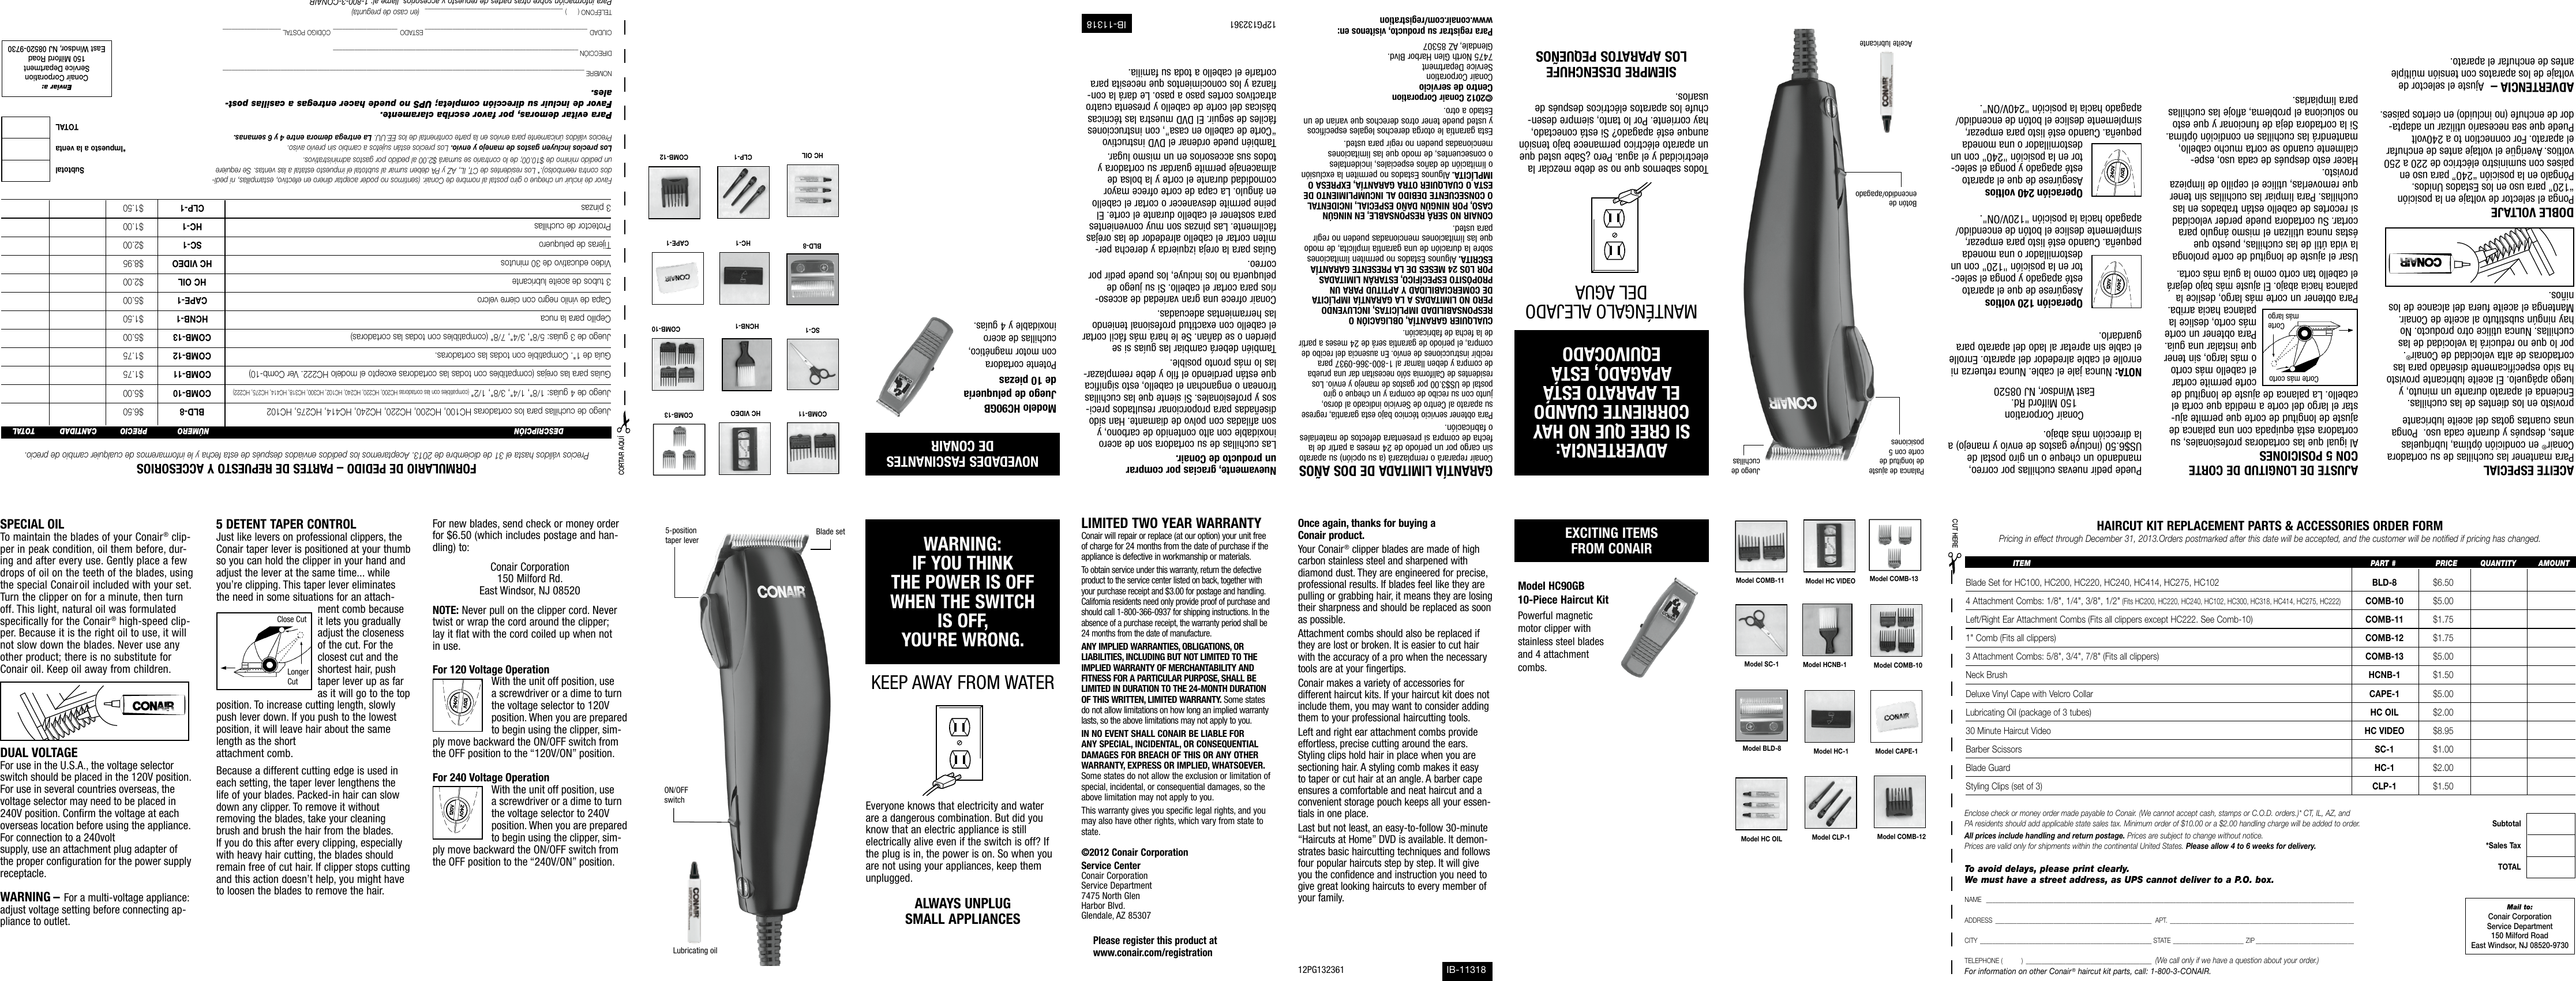 Page 2 of 2 - Conair Conair-Hair-Clippers-Hc102Ngb-Users-Manual-  Conair-hair-clippers-hc102ngb-users-manual